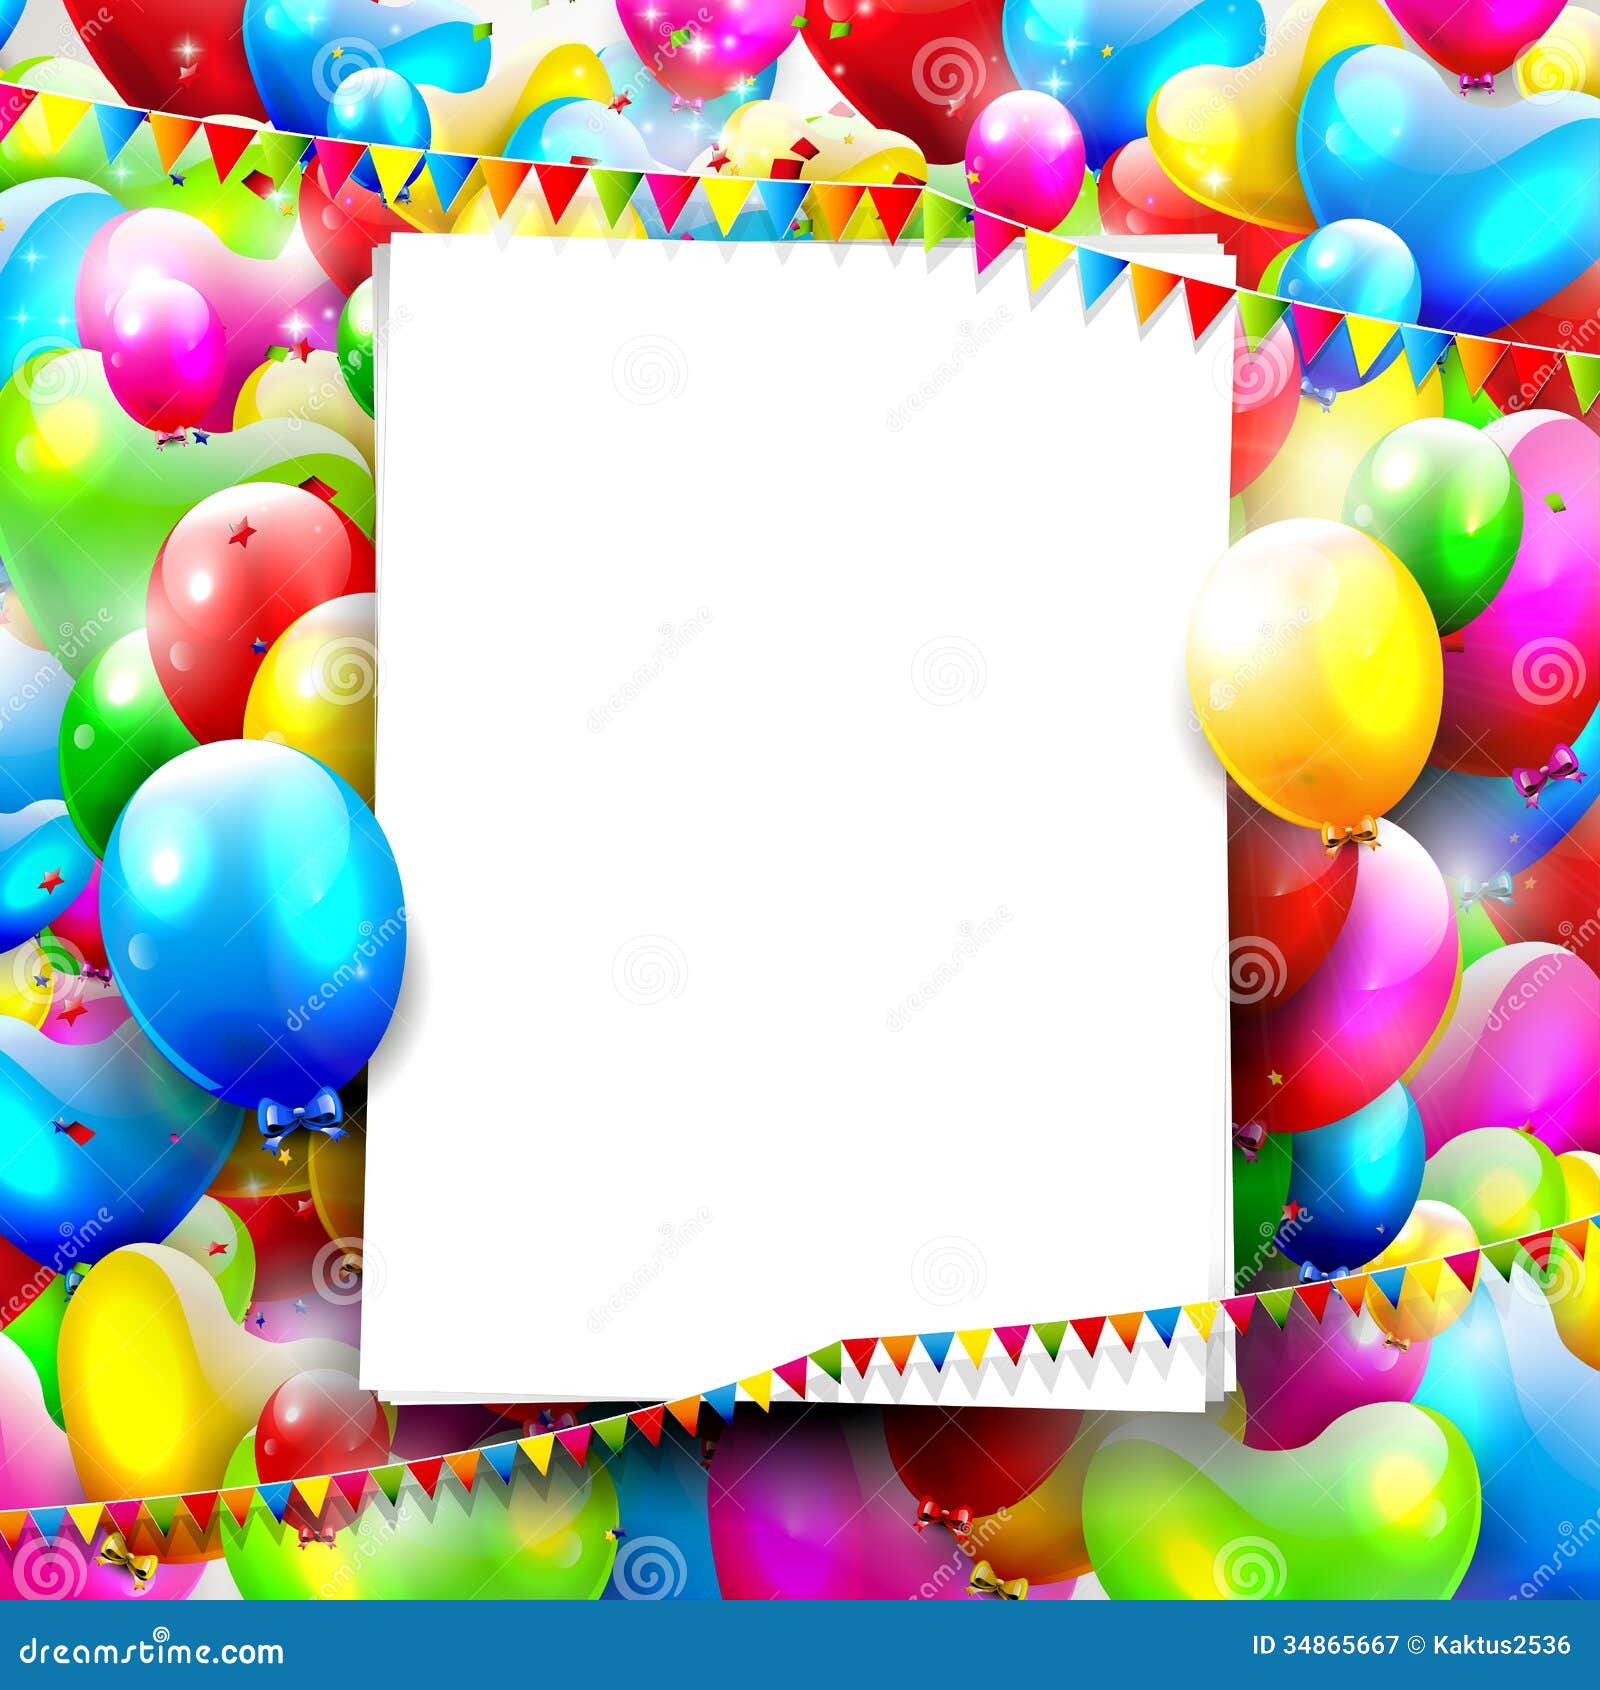 Birthday background stock vector. Illustration of childhood - 34865667